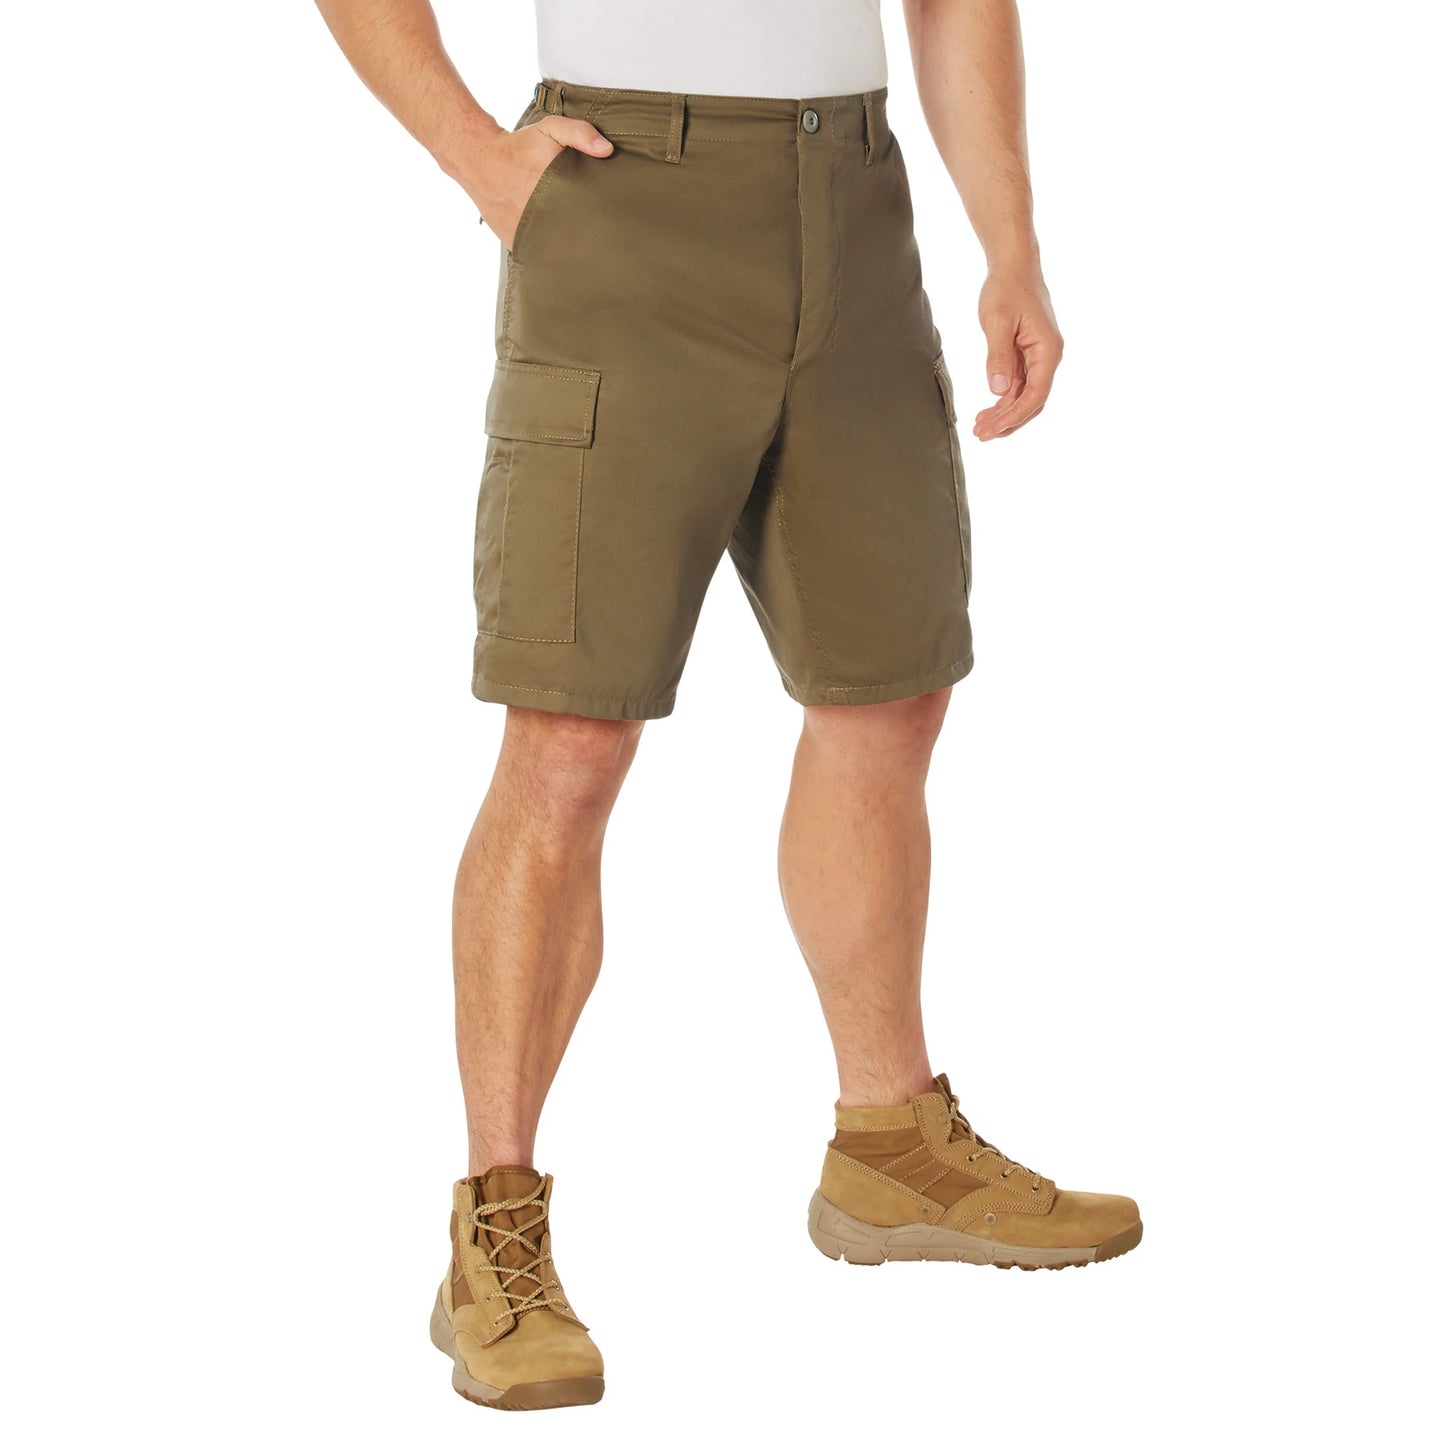 Rothco | Coyote Brown Tactical BDU Shorts